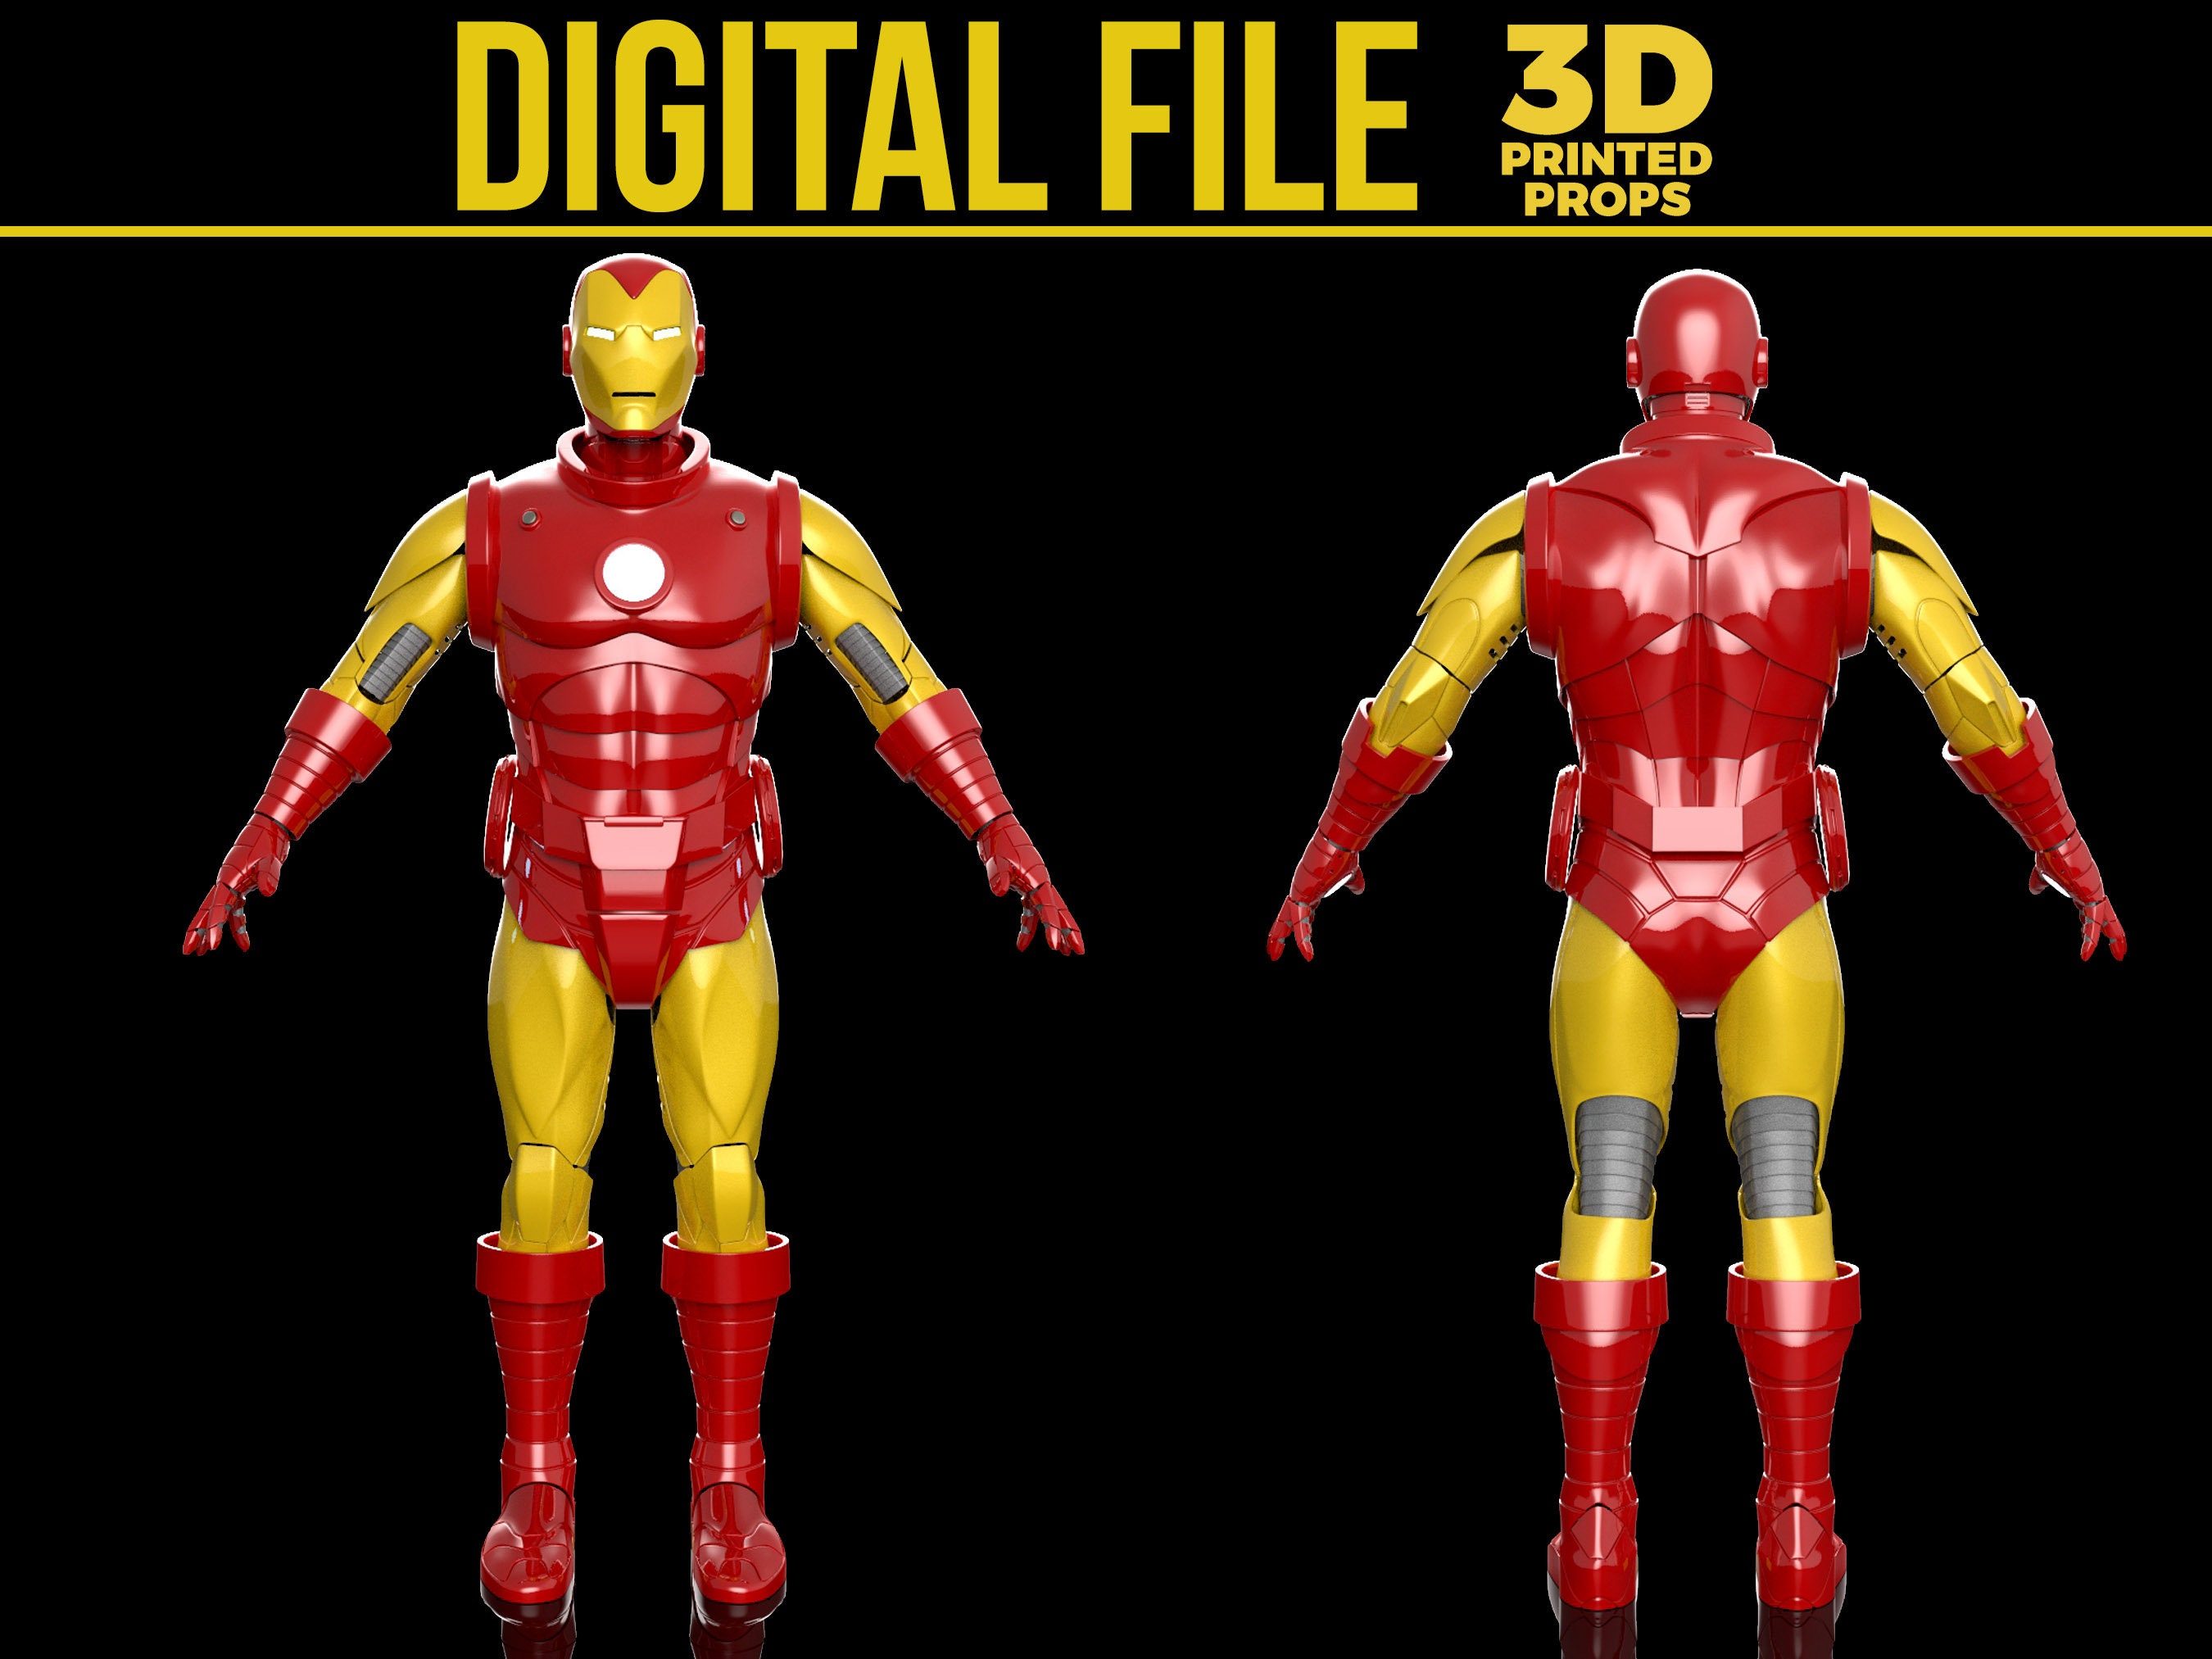 Ironman Mark 3 - 3D model by MrUnBlakeable (@unBlakeable) [f5e6848]